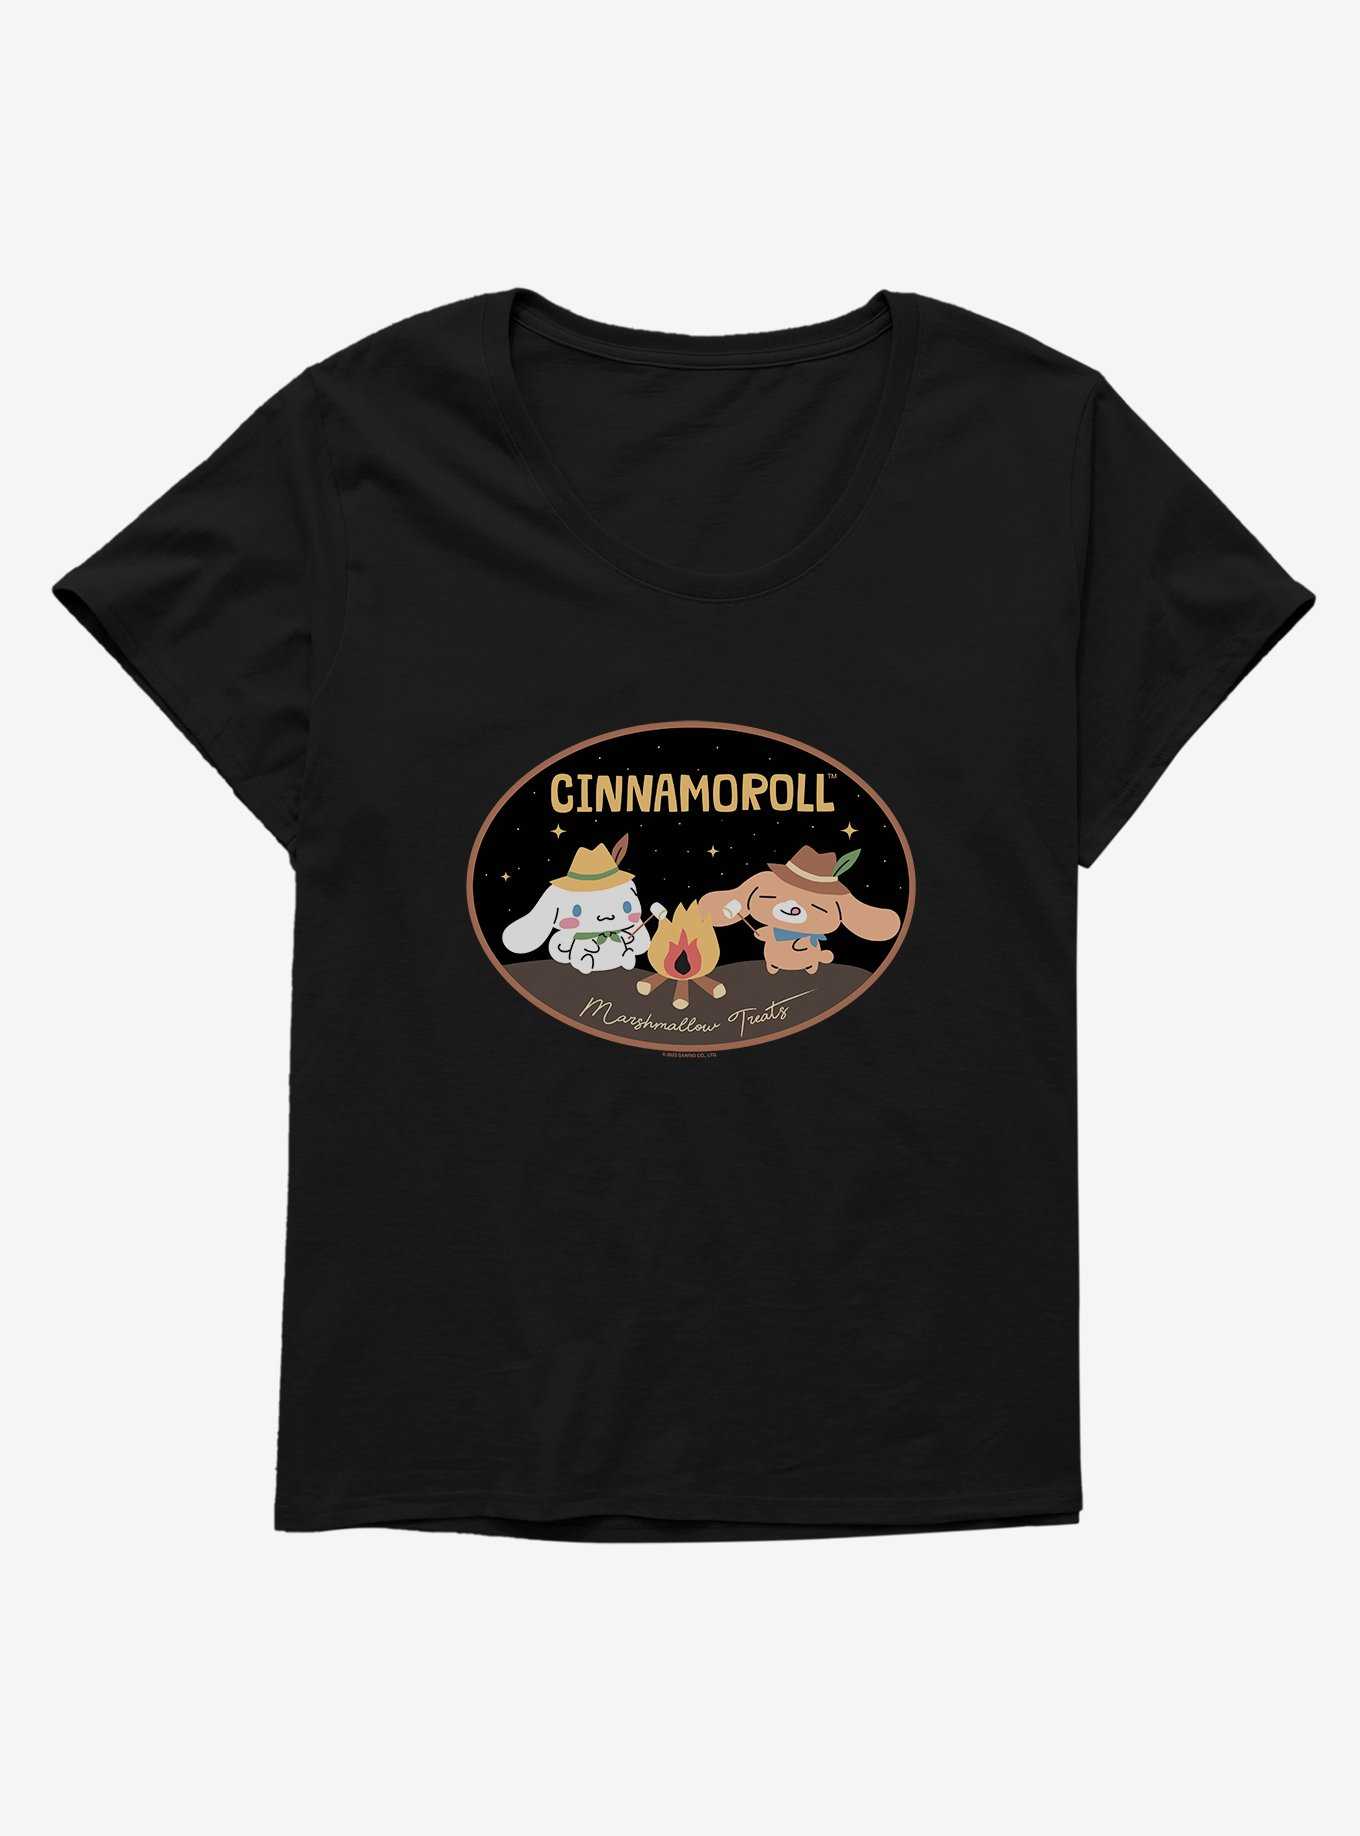 Cinnamoroll Marshmallow Treats Girls T-Shirt Plus Size, , hi-res